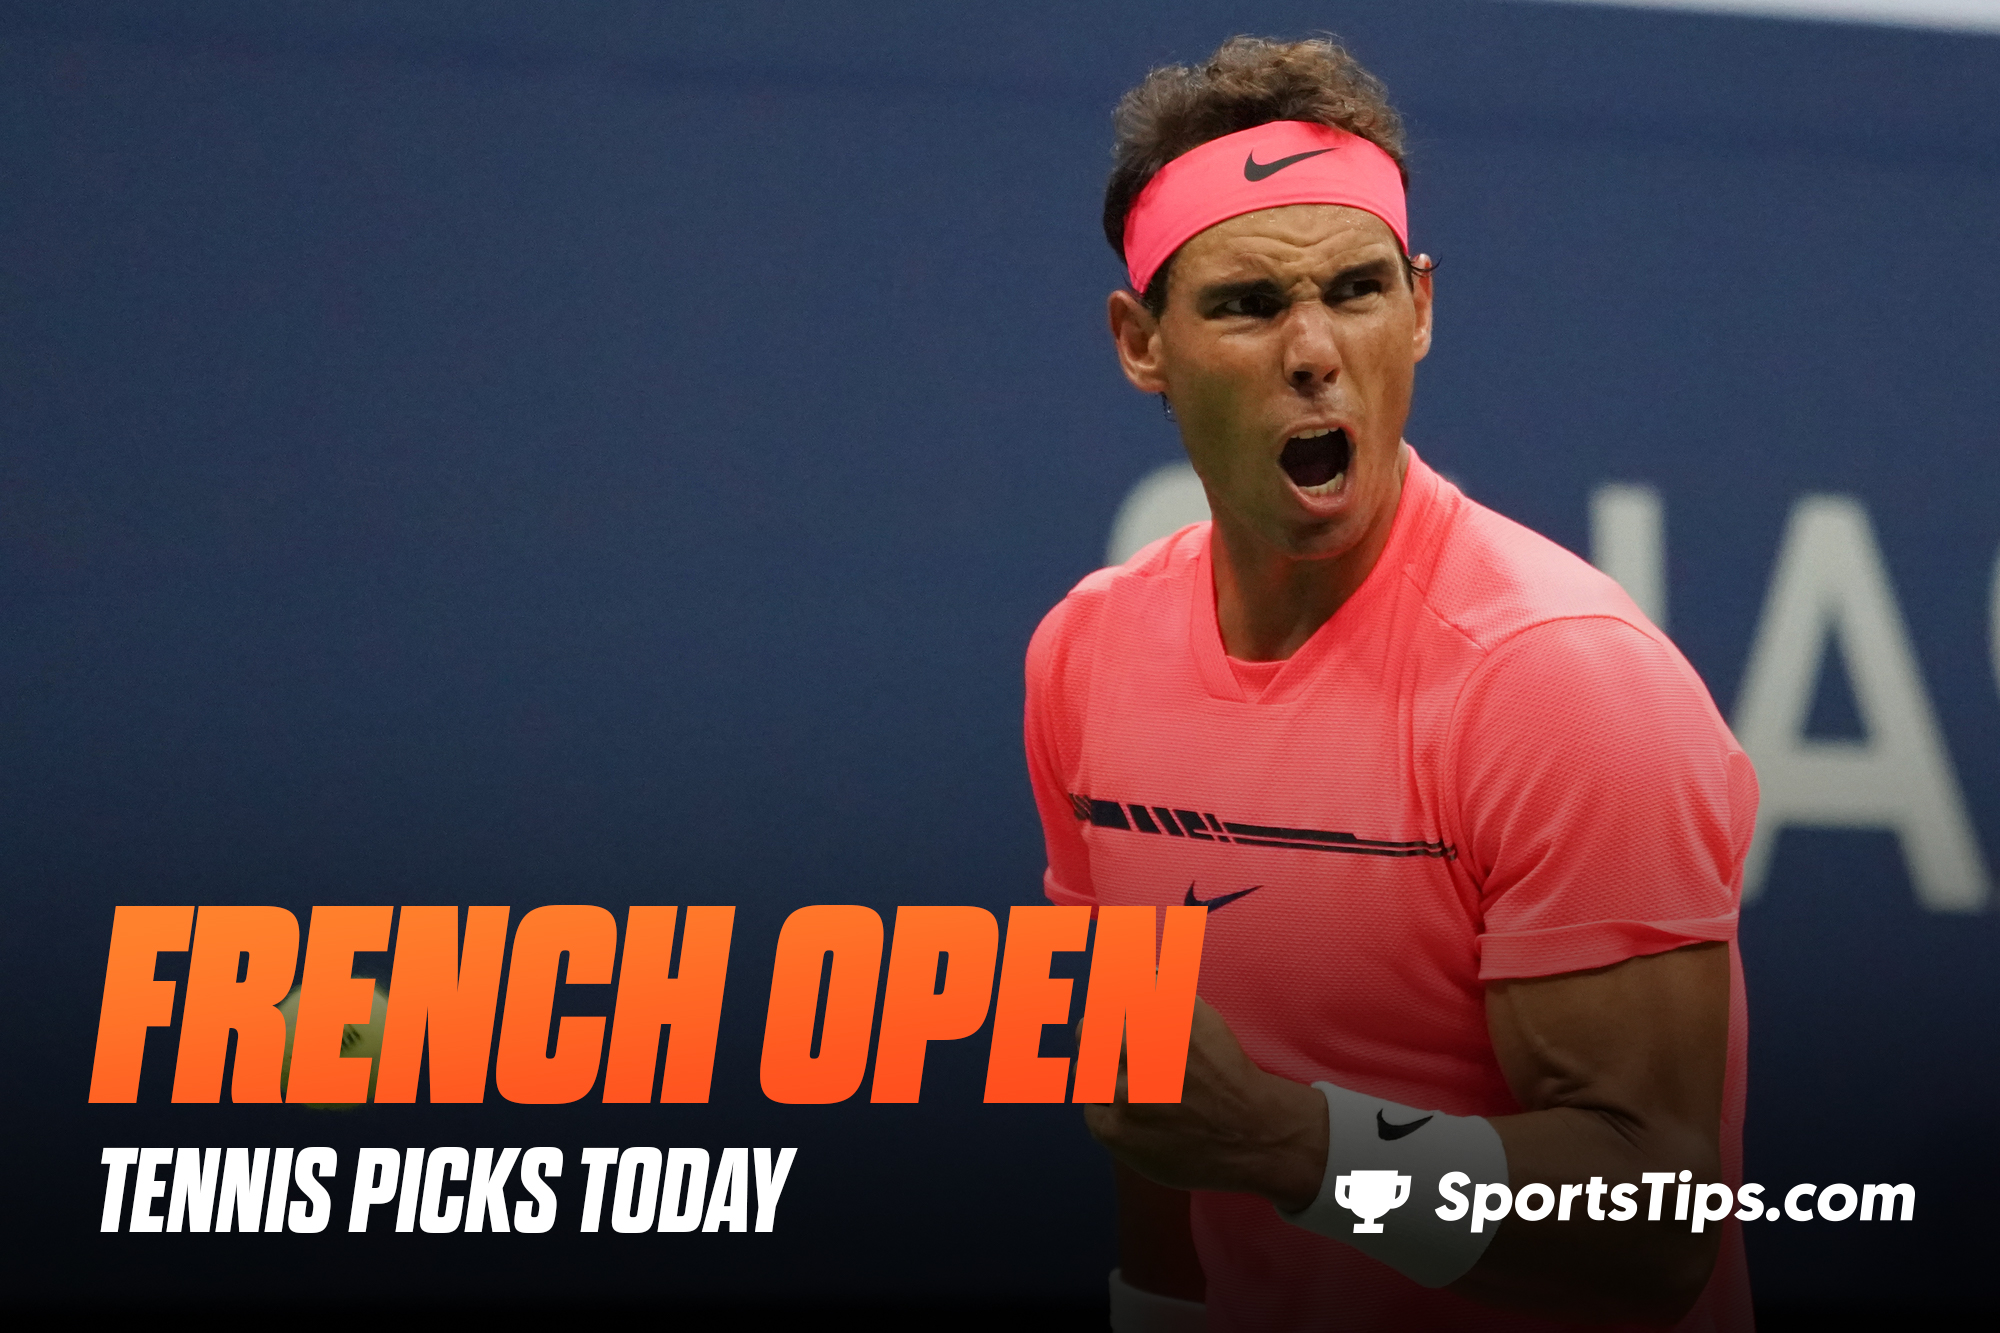 French Open Predictions: SportsTips’ Top Tennis Picks For The Men’s Semi Finals